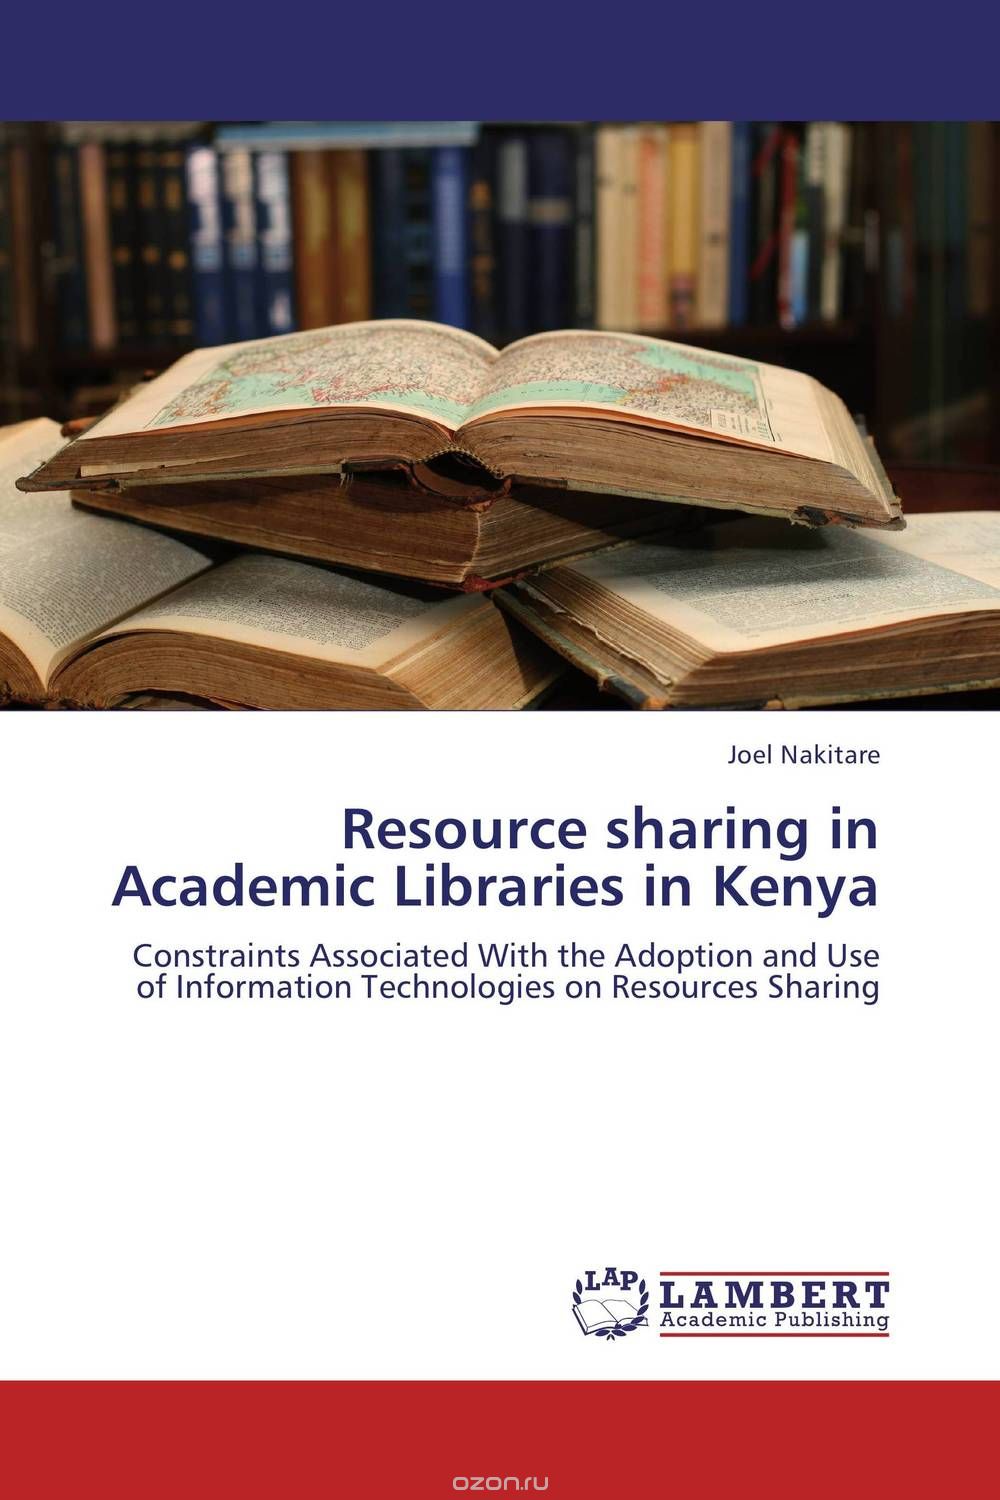 Скачать книгу "Resource sharing in Academic Libraries in Kenya"